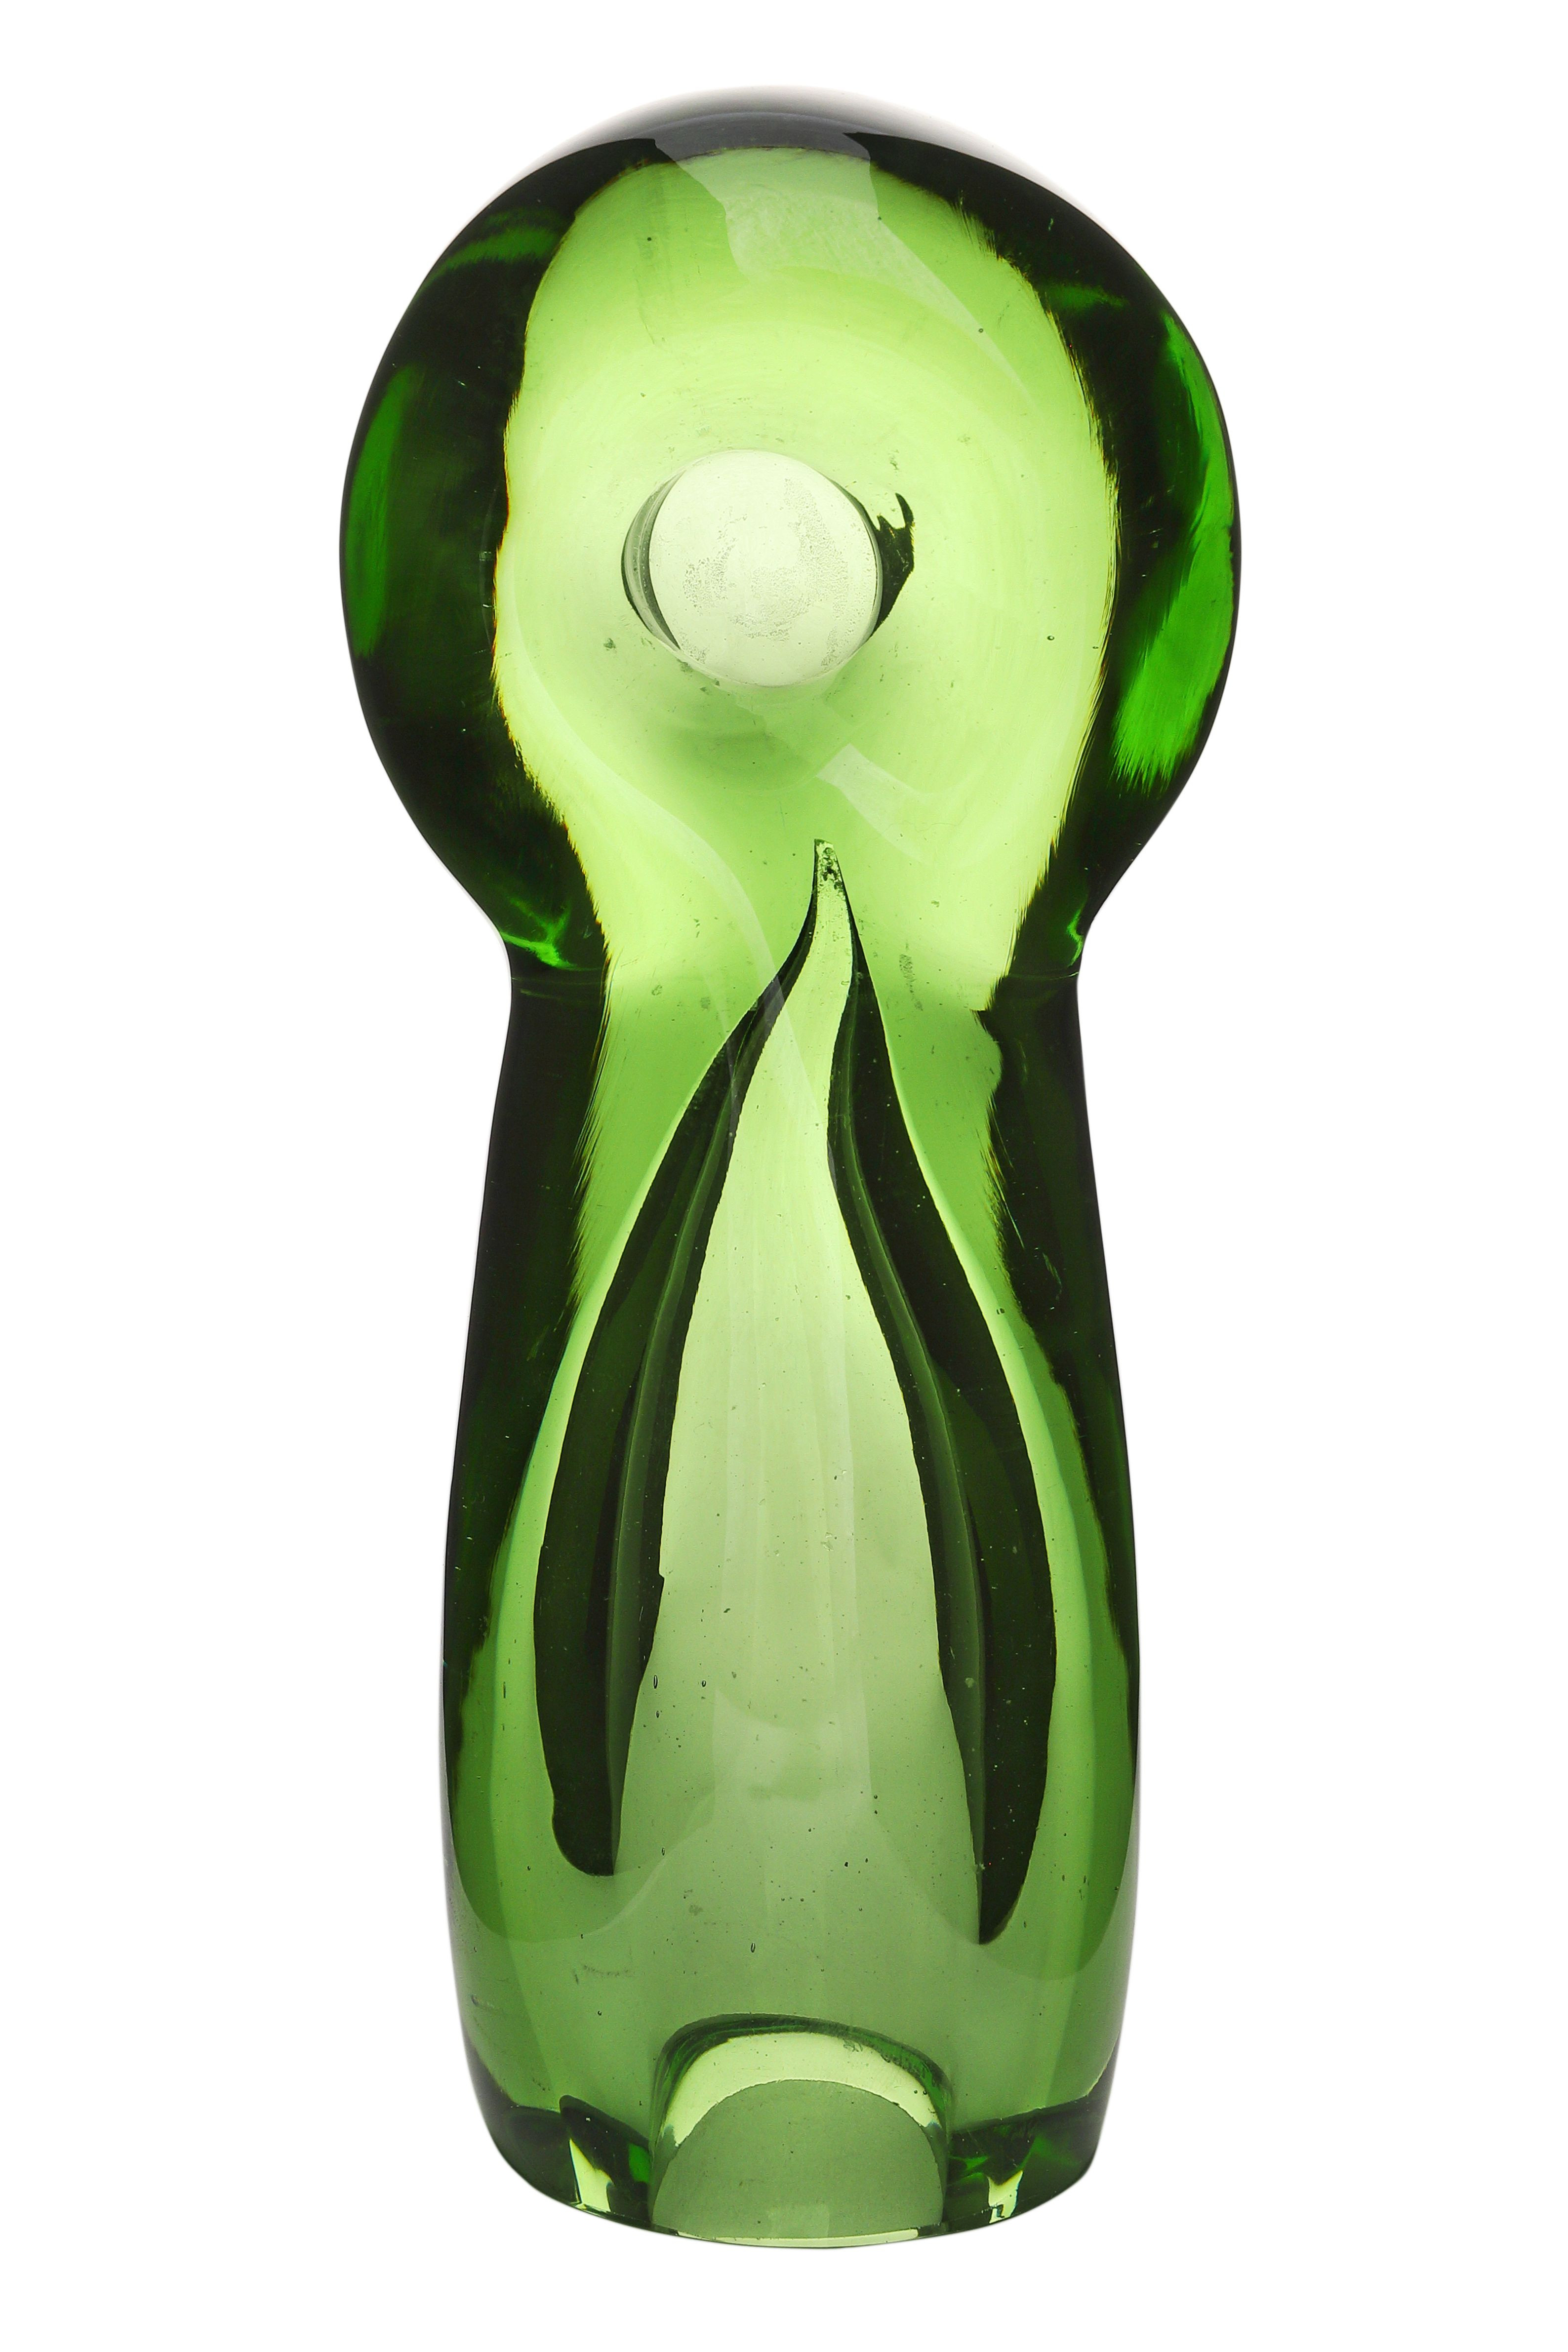 19 Fantastic Blenko Green Glass Vase 2024 free download blenko green glass vase of riihimaki kaappikello pirtti olive green glass vase by hel regarding vac284inac296 terho the nocturnal thoughts by vac2a4inac2b6 terho